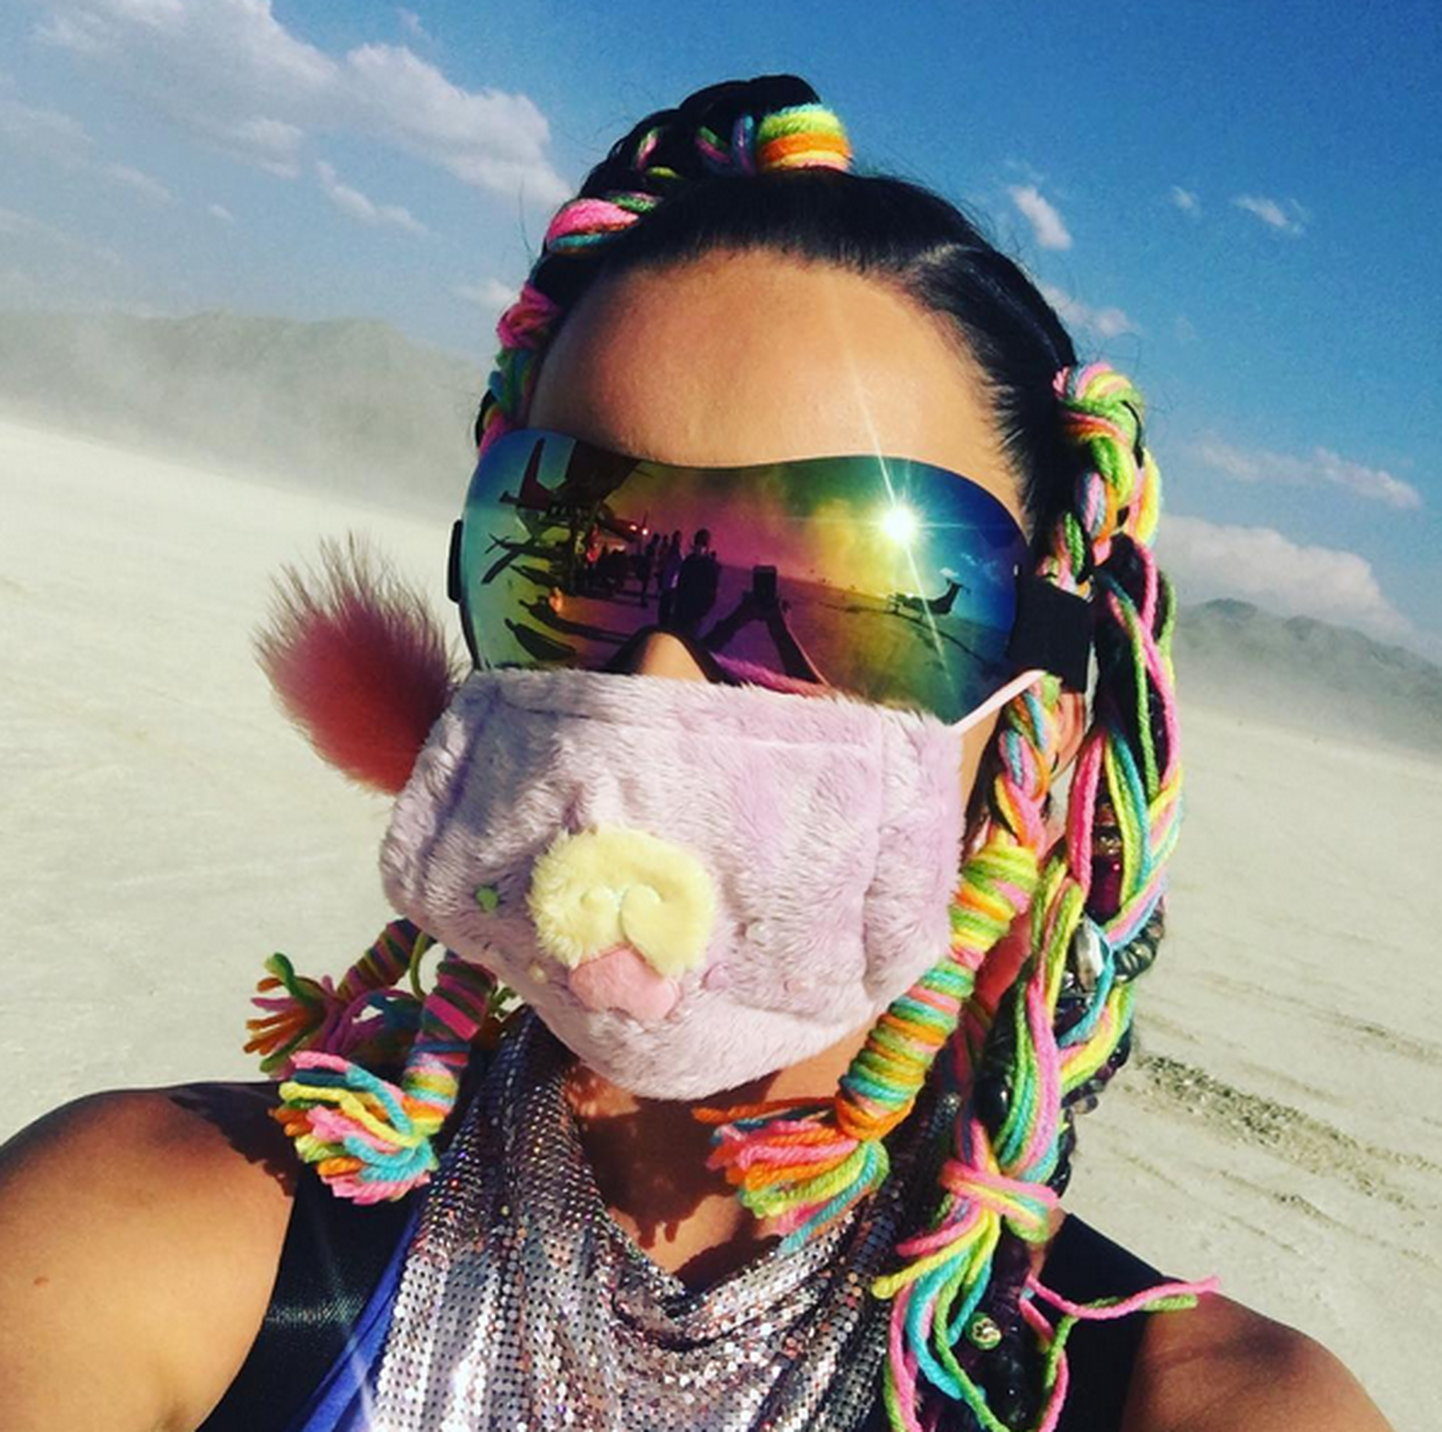 Katy Perry Burning Man 2016 festivalil